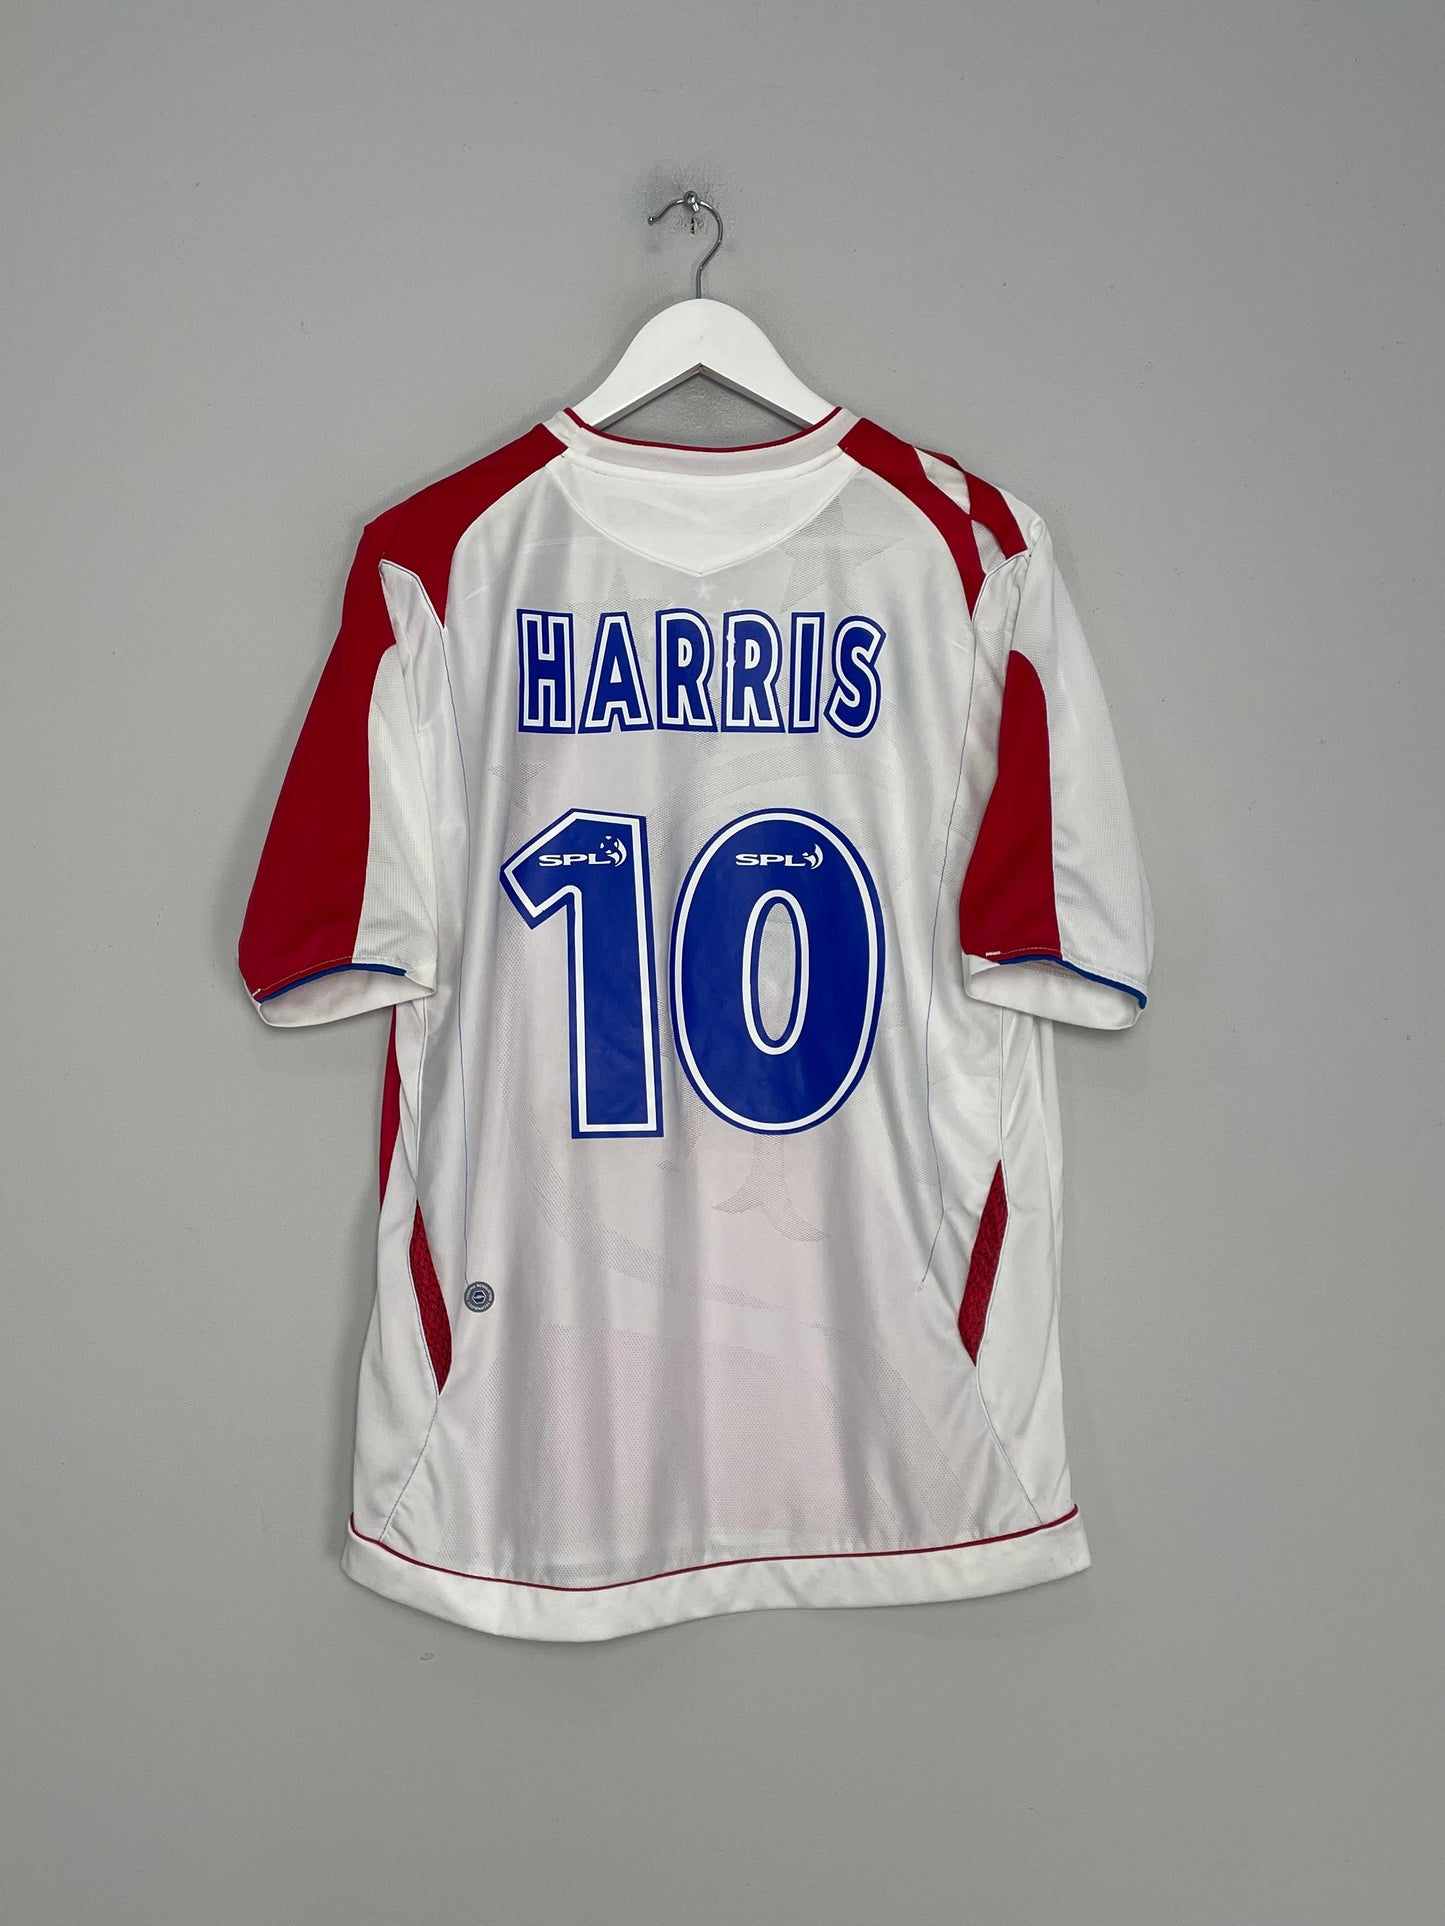 2006/07 RANGERS HARRIS #10 AWAY SHIRT (L) UMBRO